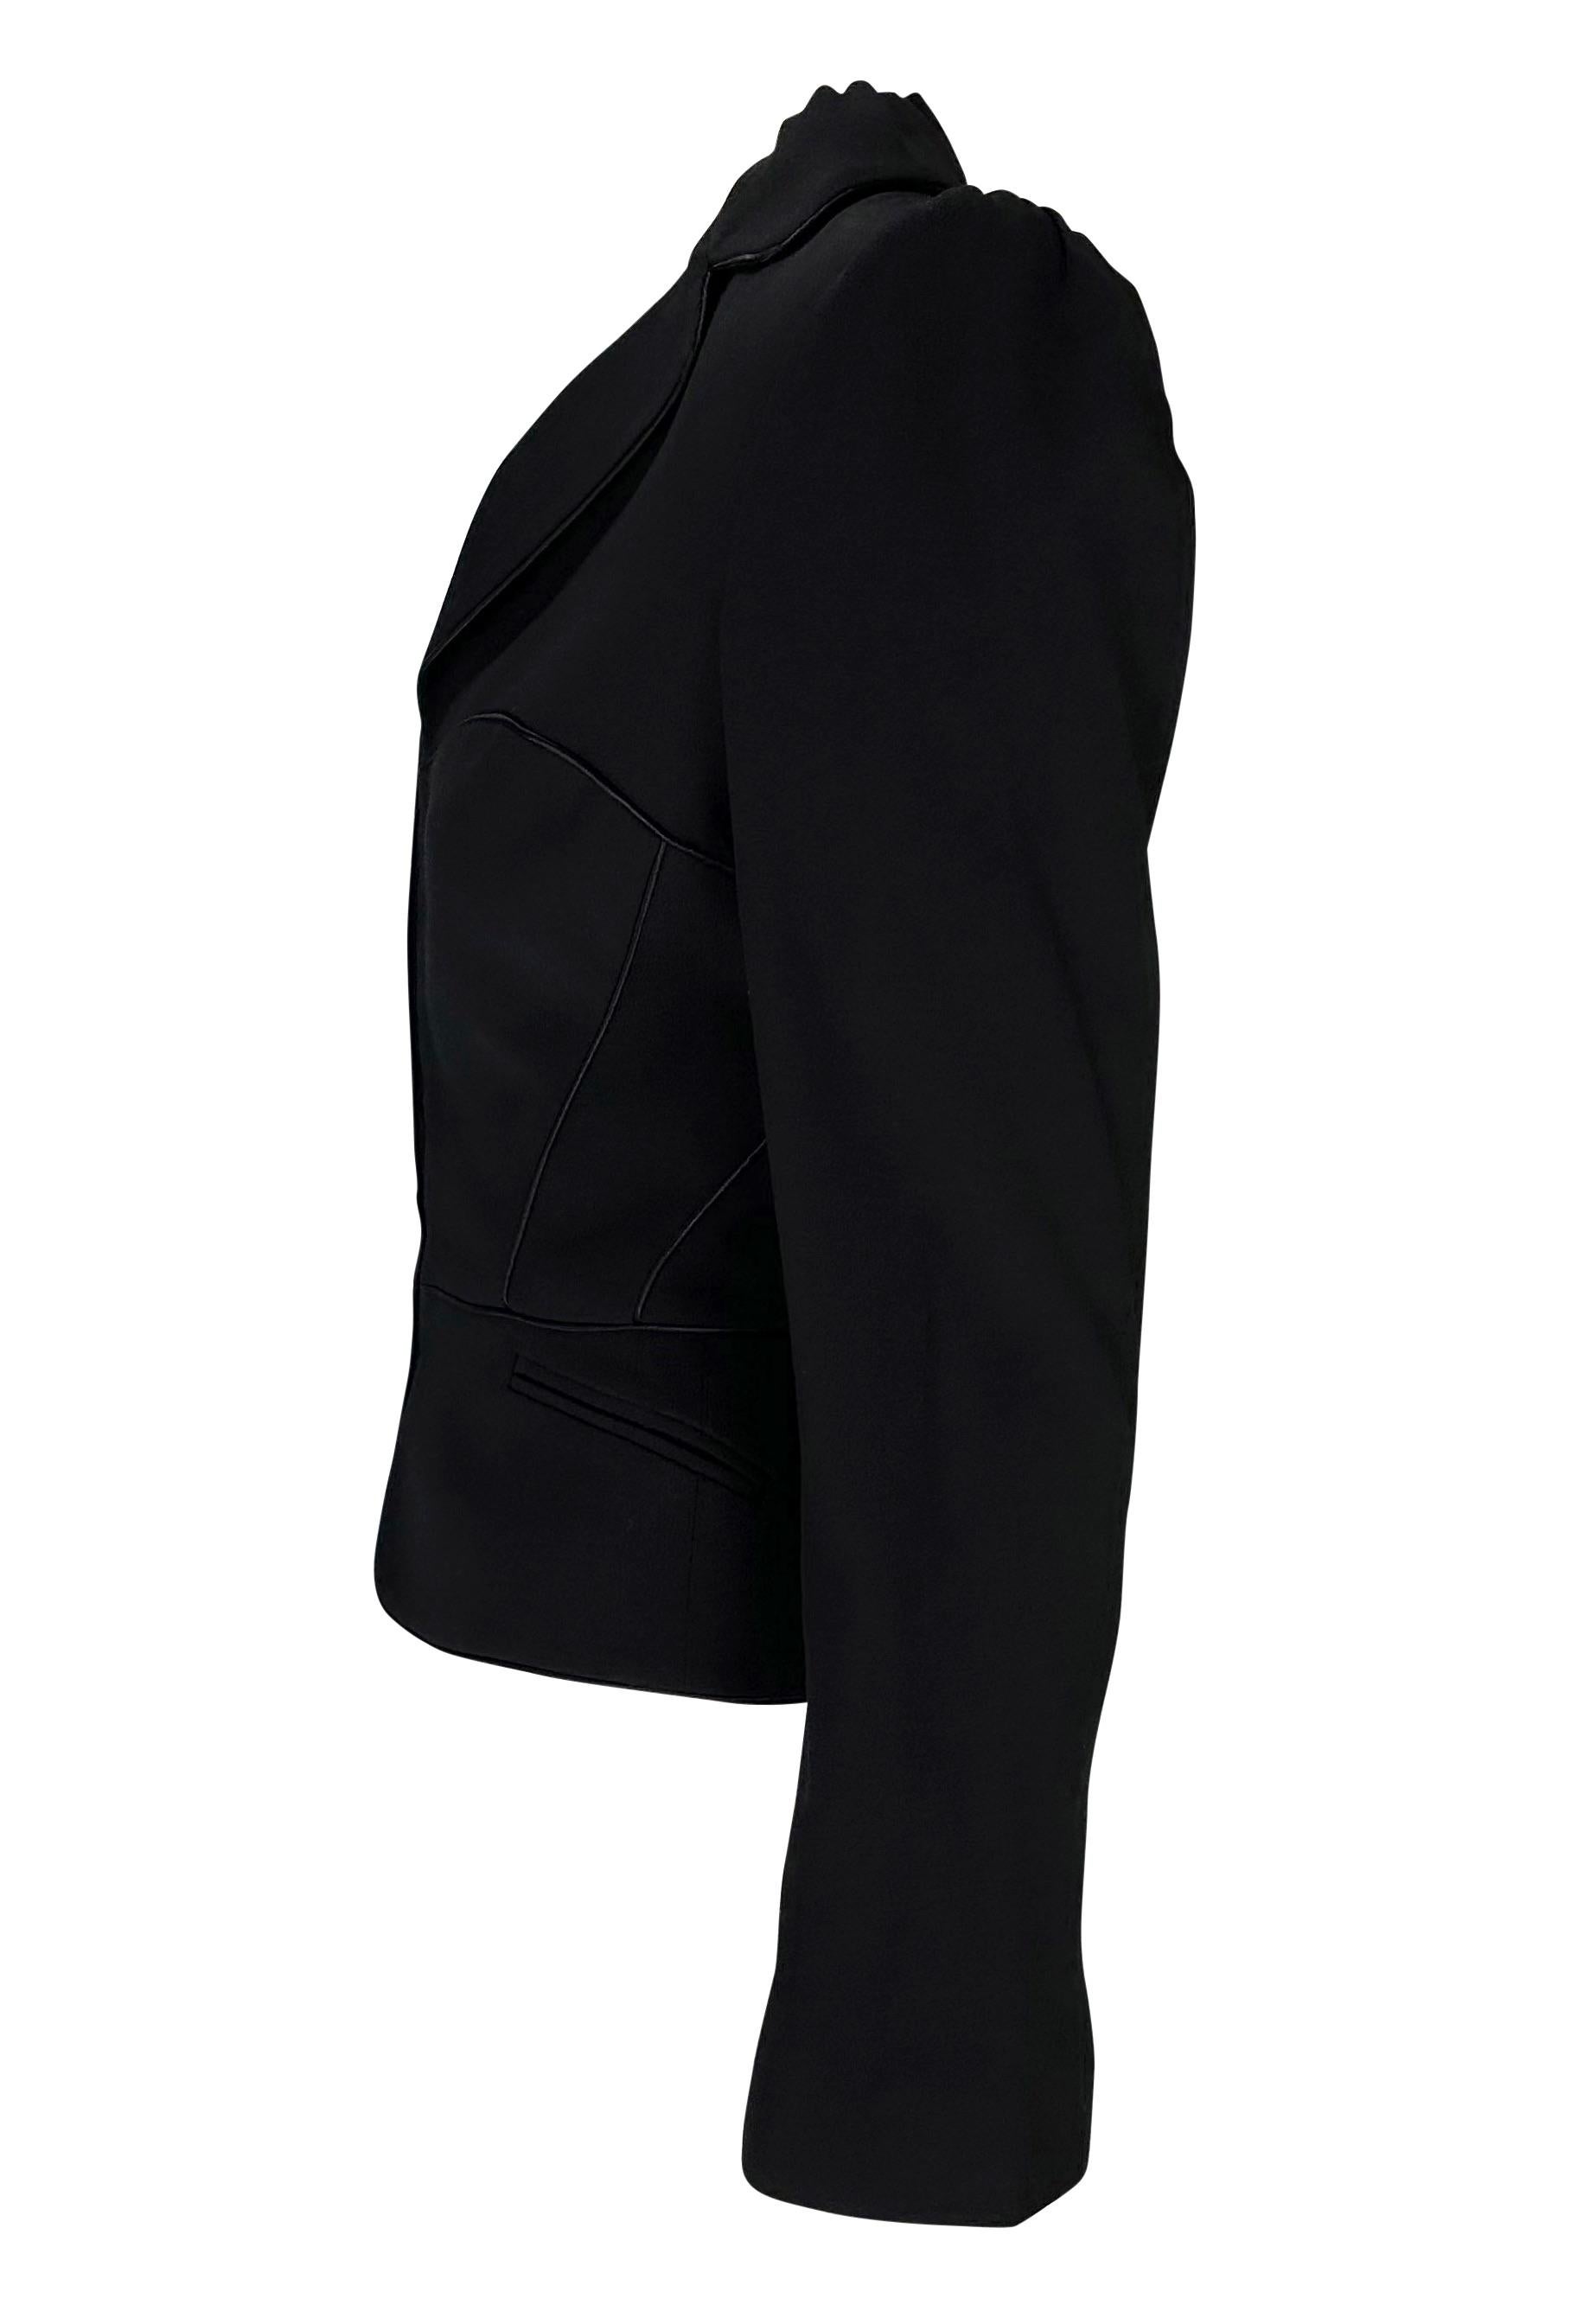 2000s Emanuel Ungaro Corset Lace-Up Black Cinched Blazer Jacket For Sale 1